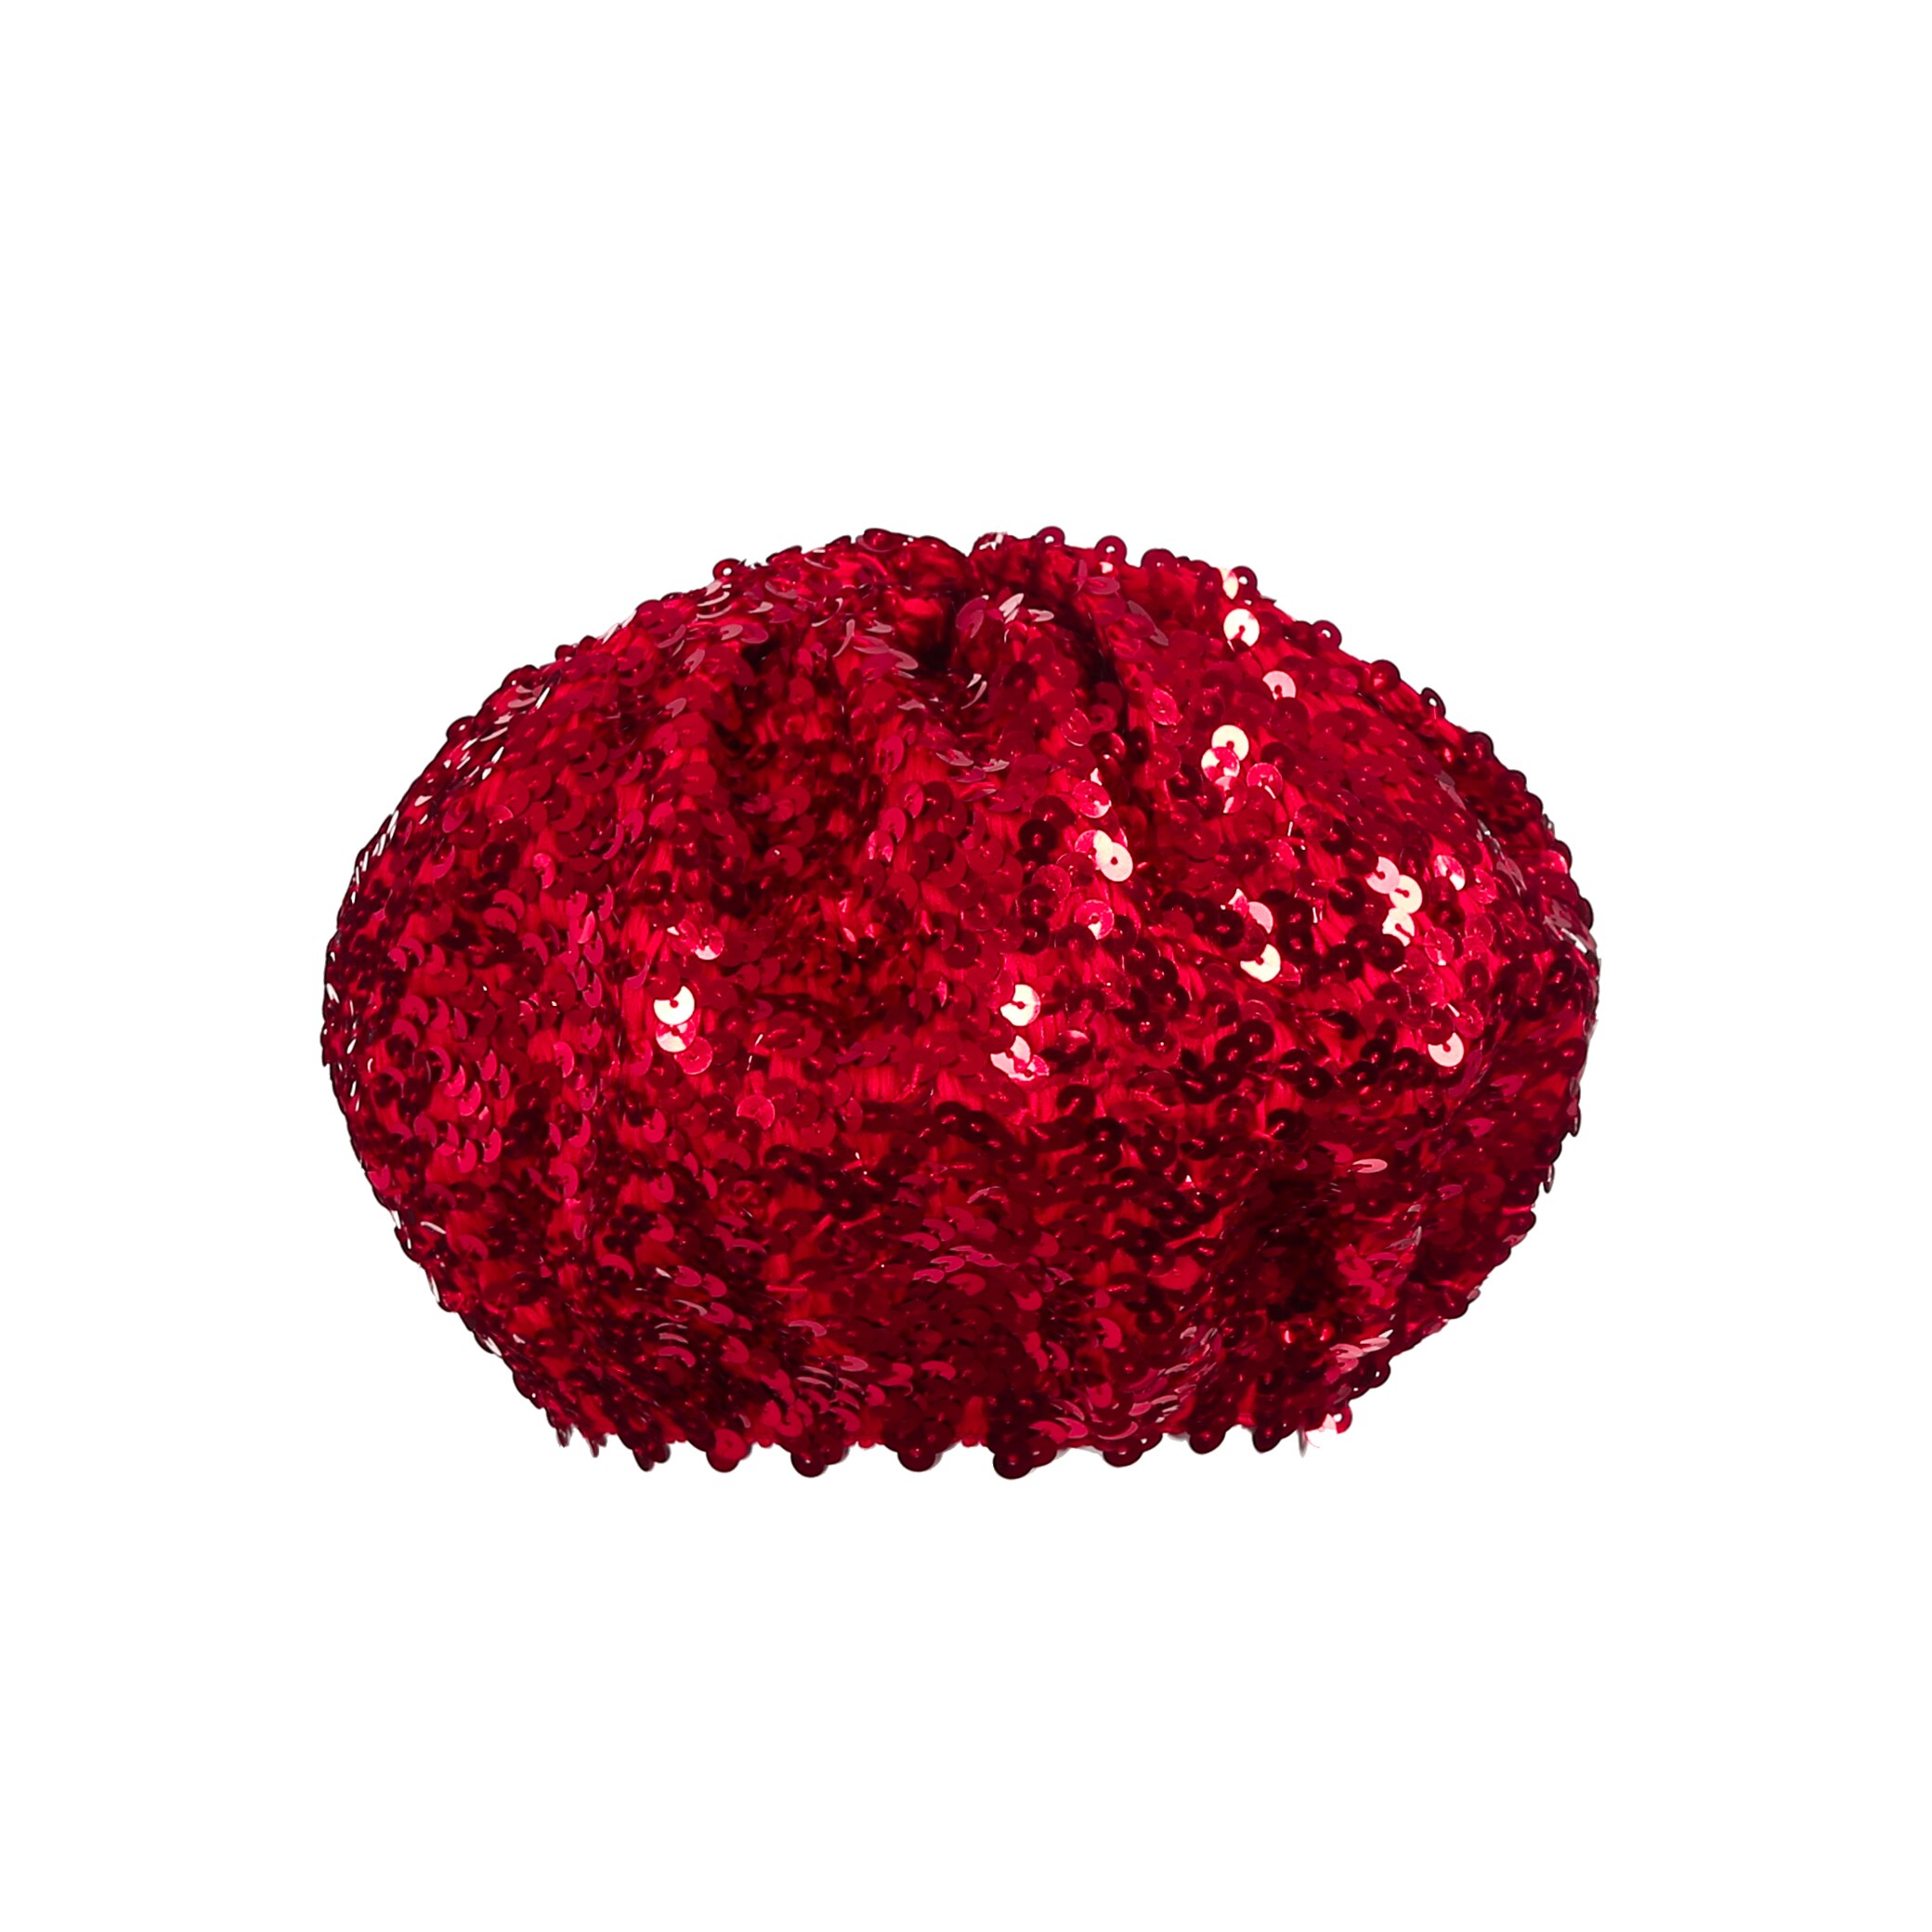 Kvinder bling stretch metallisk skinnende paillet fransk baret hat beanie clubwear cap: Rød